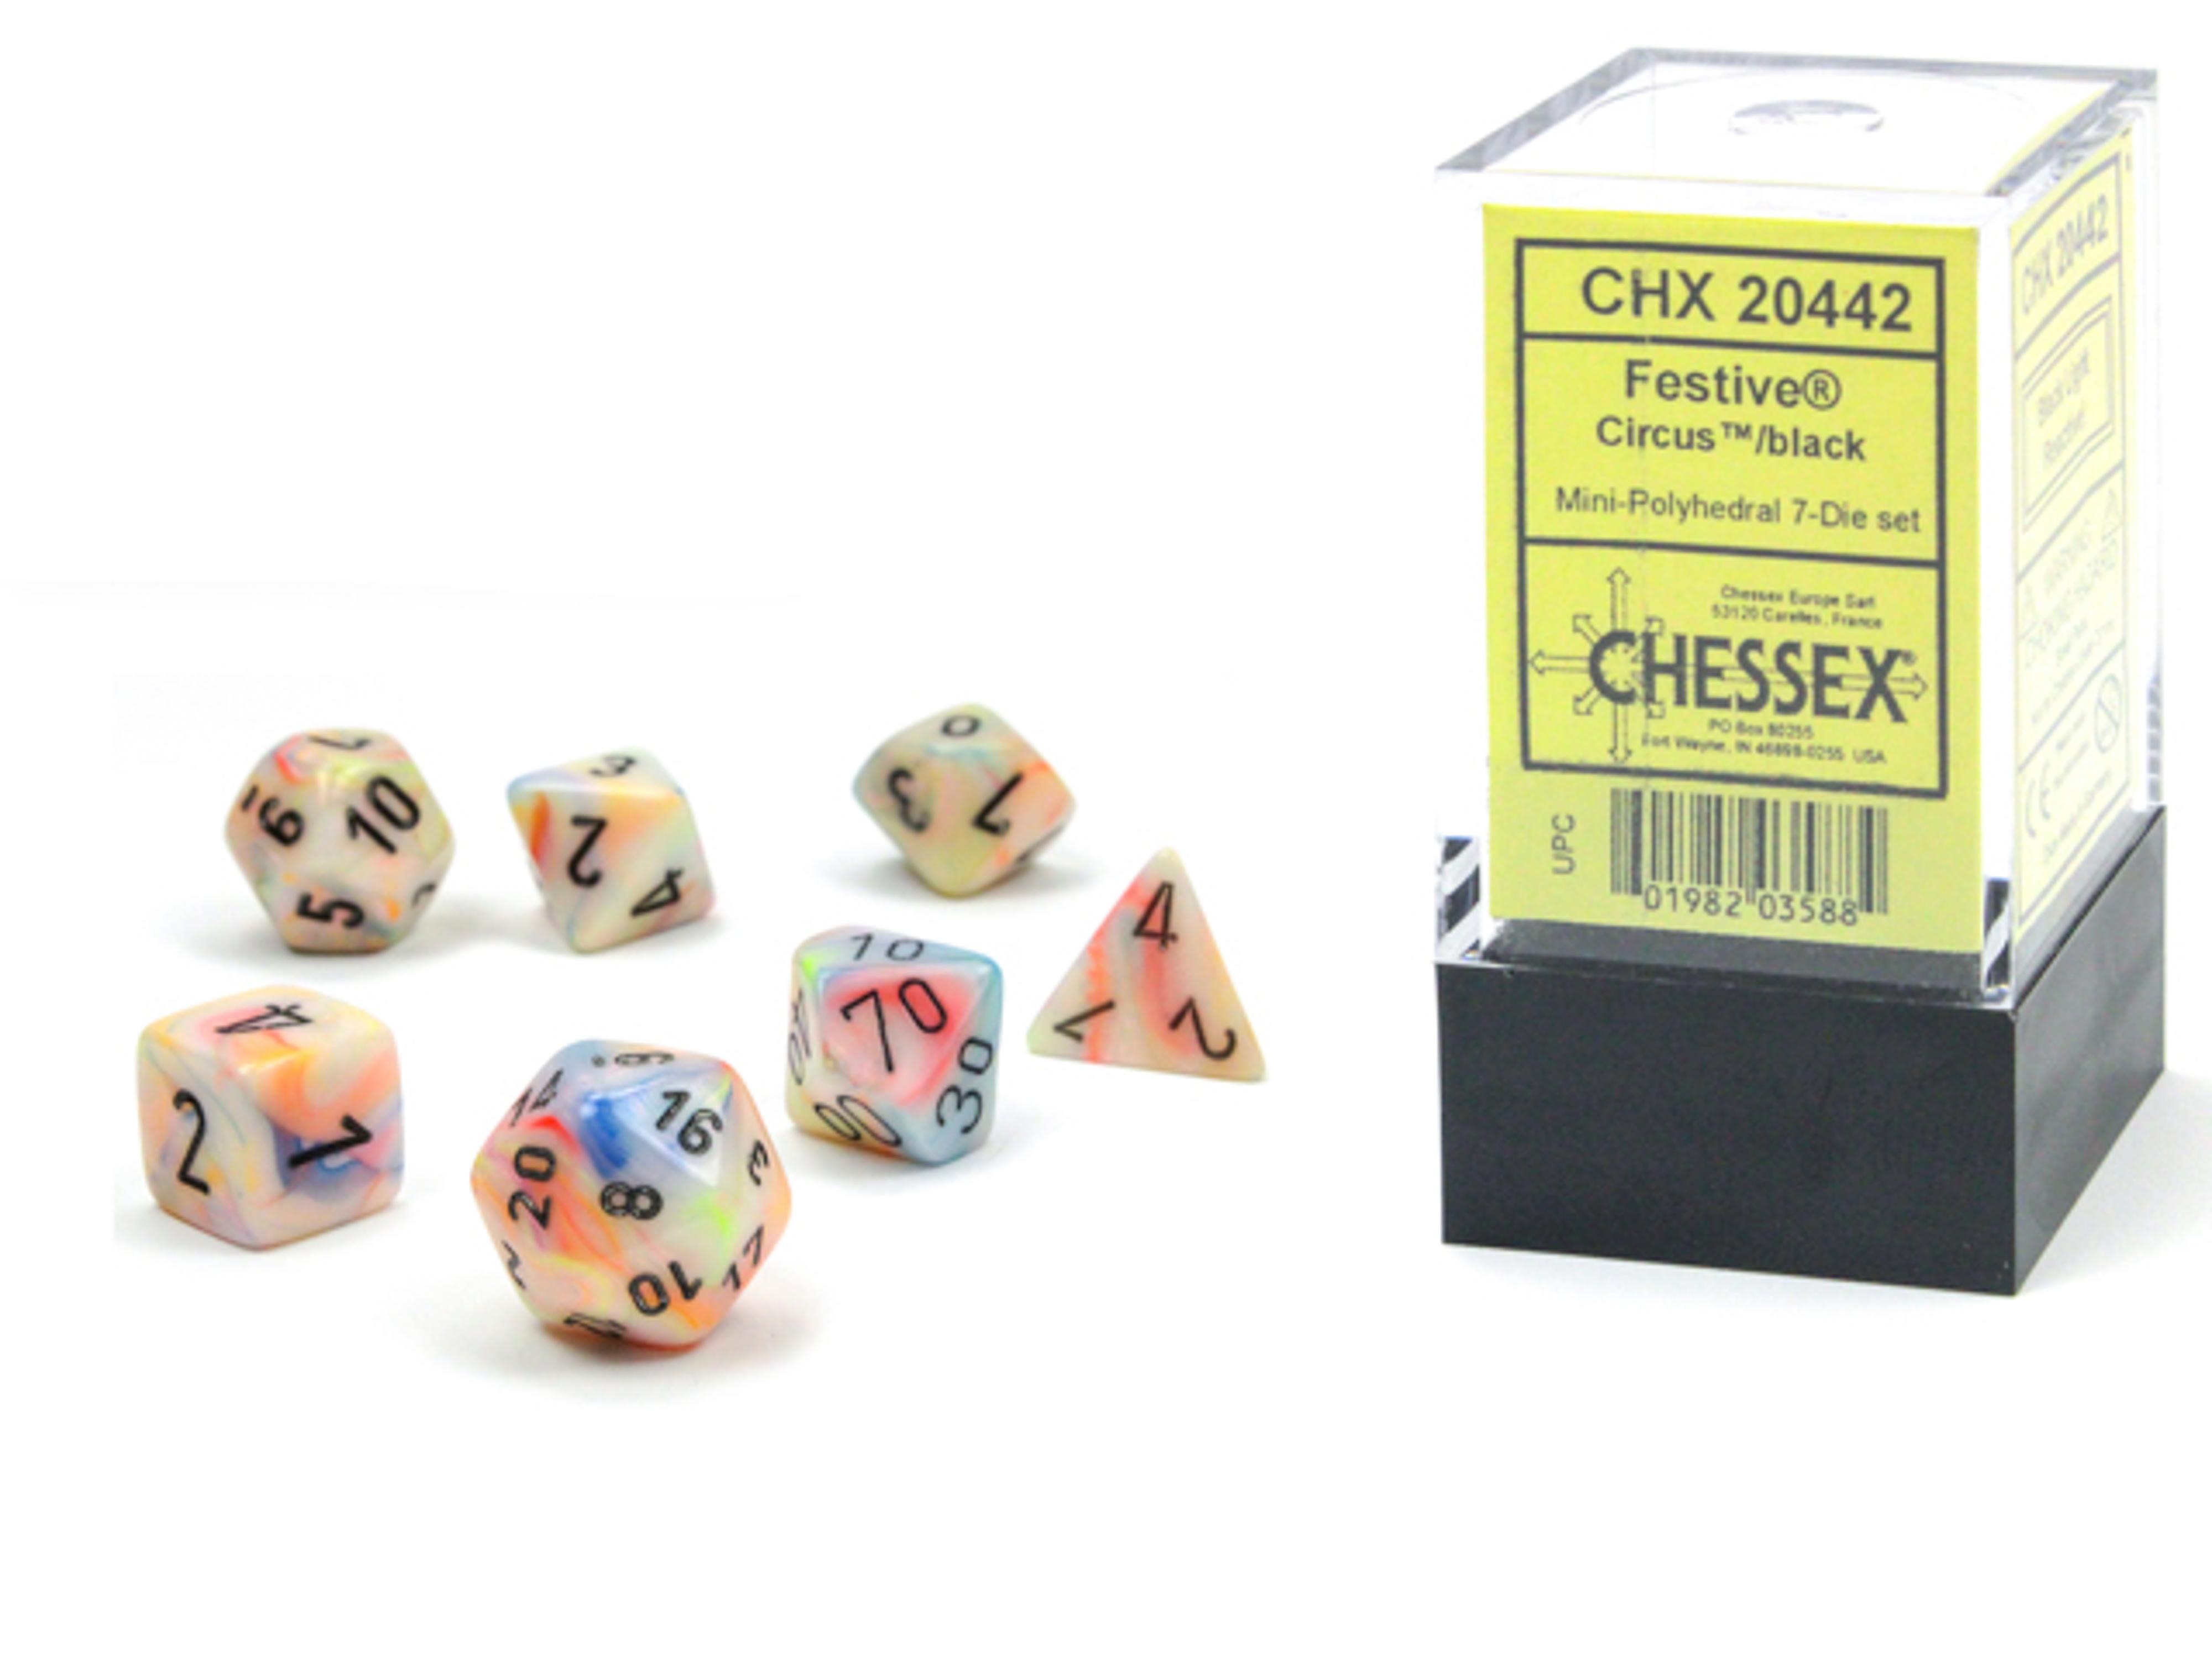 Chessex Festive Mini Polyhedral Circus/Black 7 Die Set